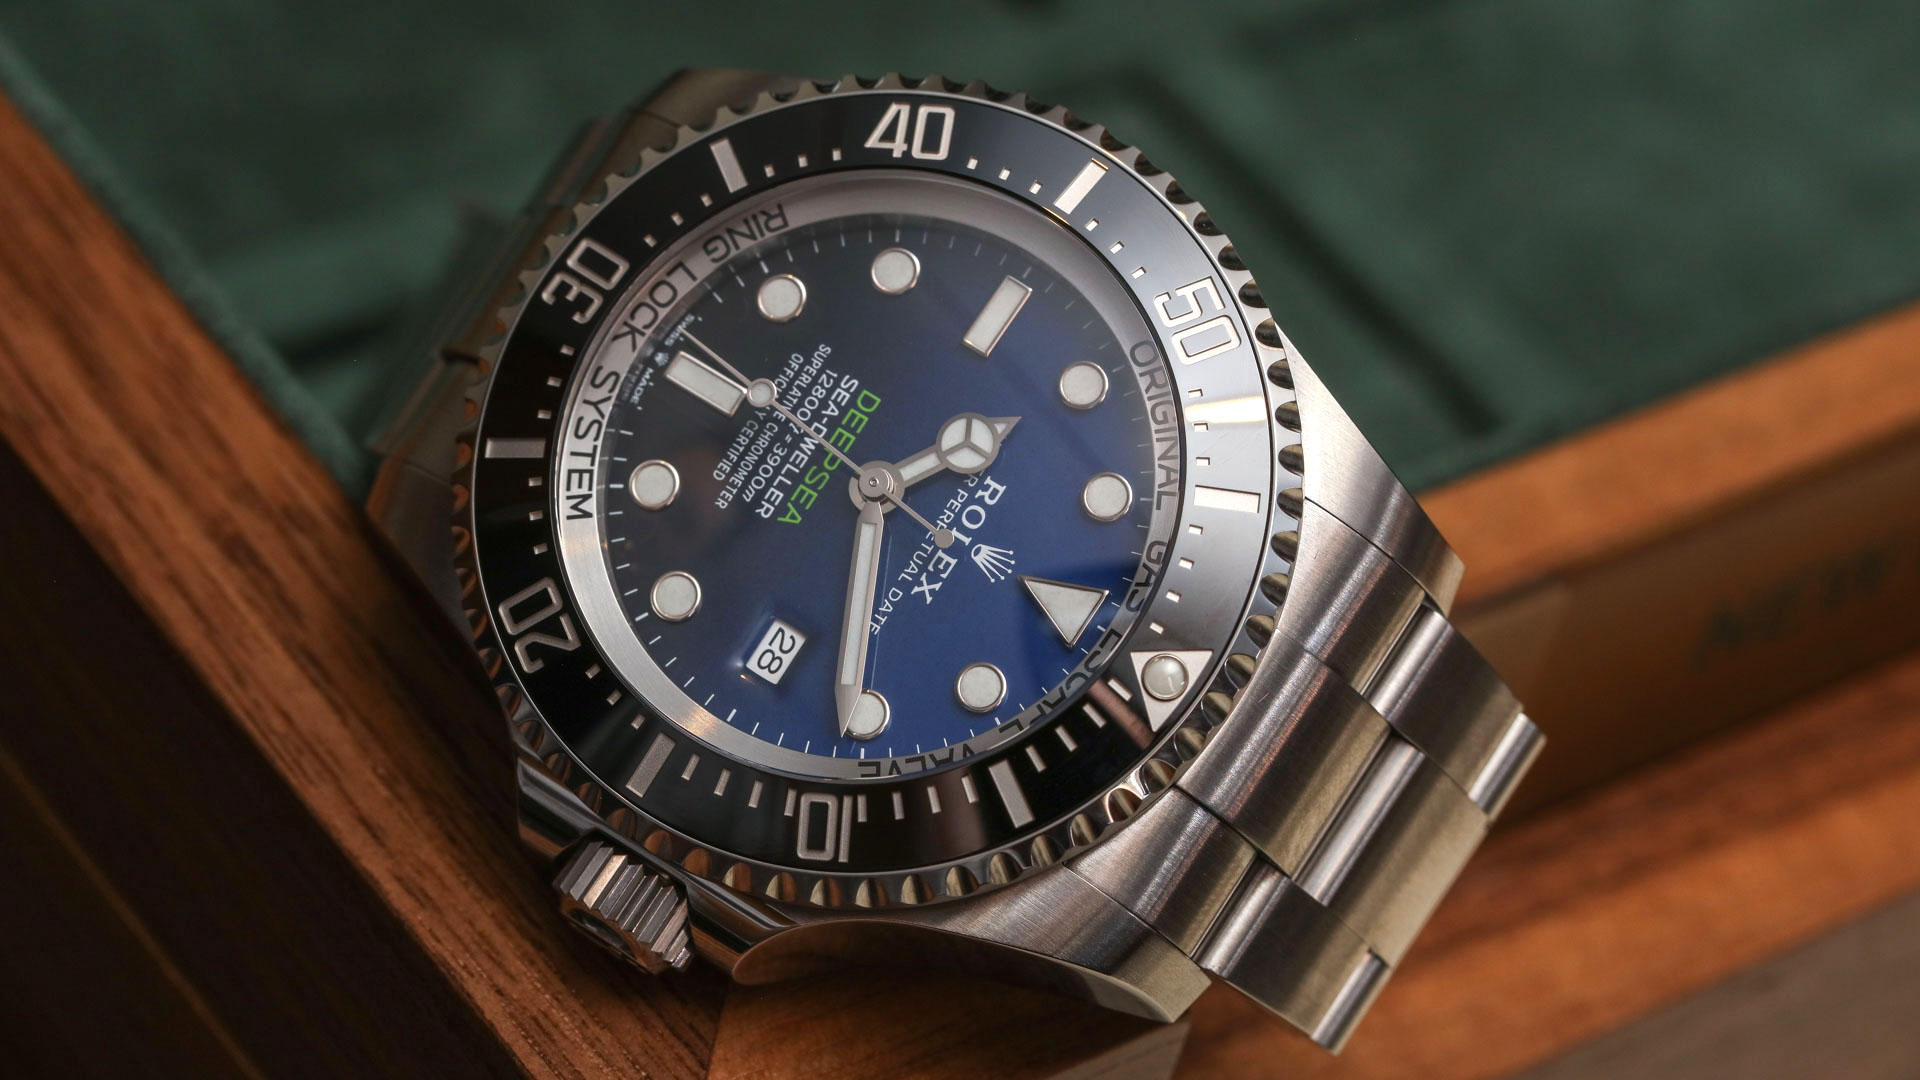 Rolex Deepsea Sea-Dweller 126660 Watch Hands-On